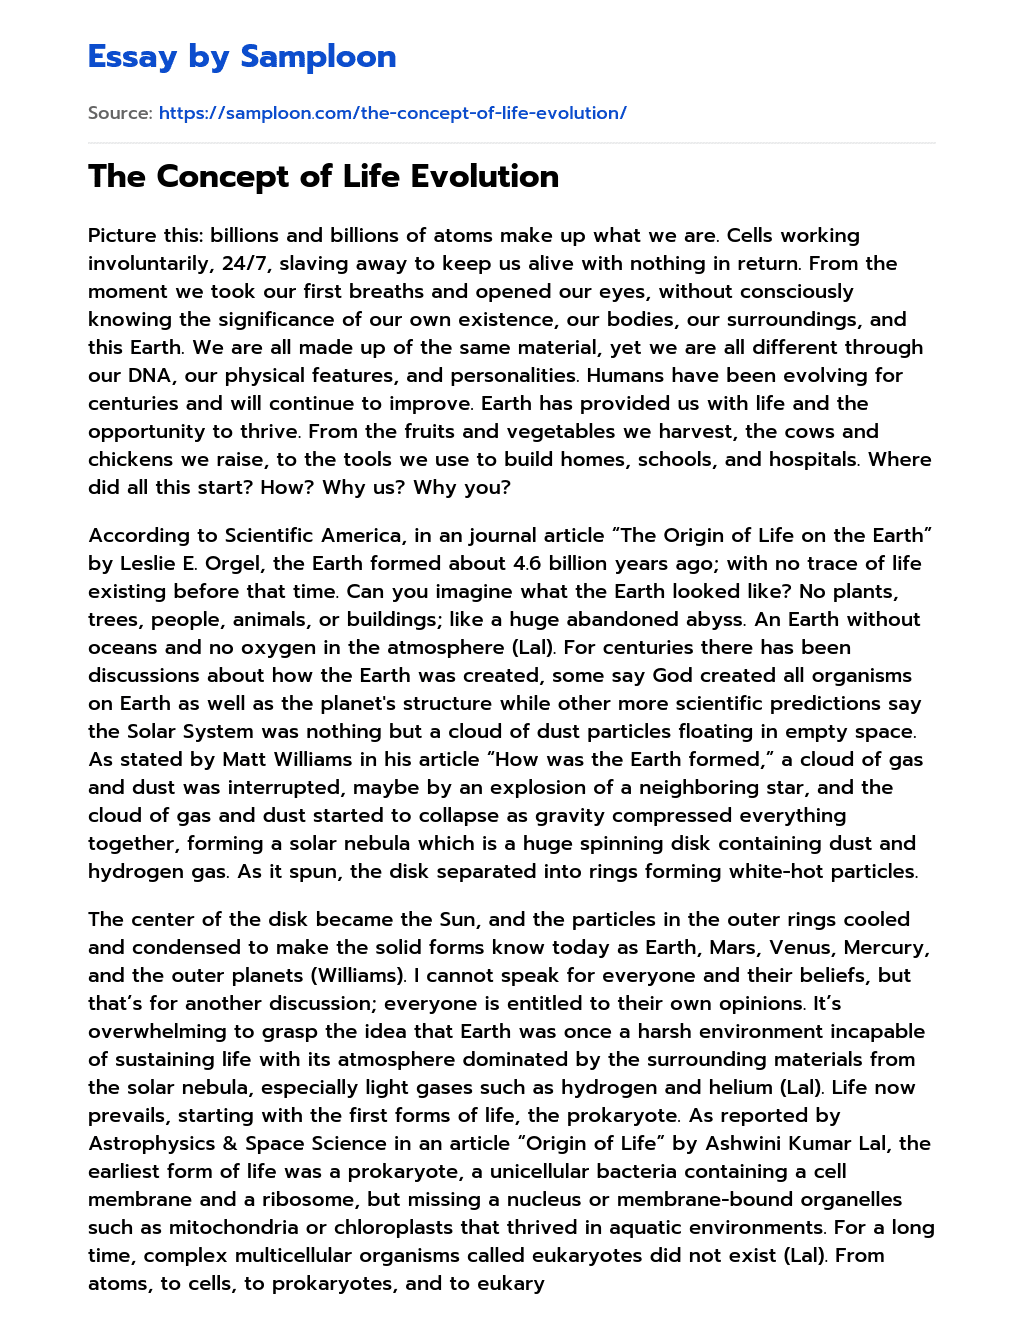 The Concept of Life Evolution essay